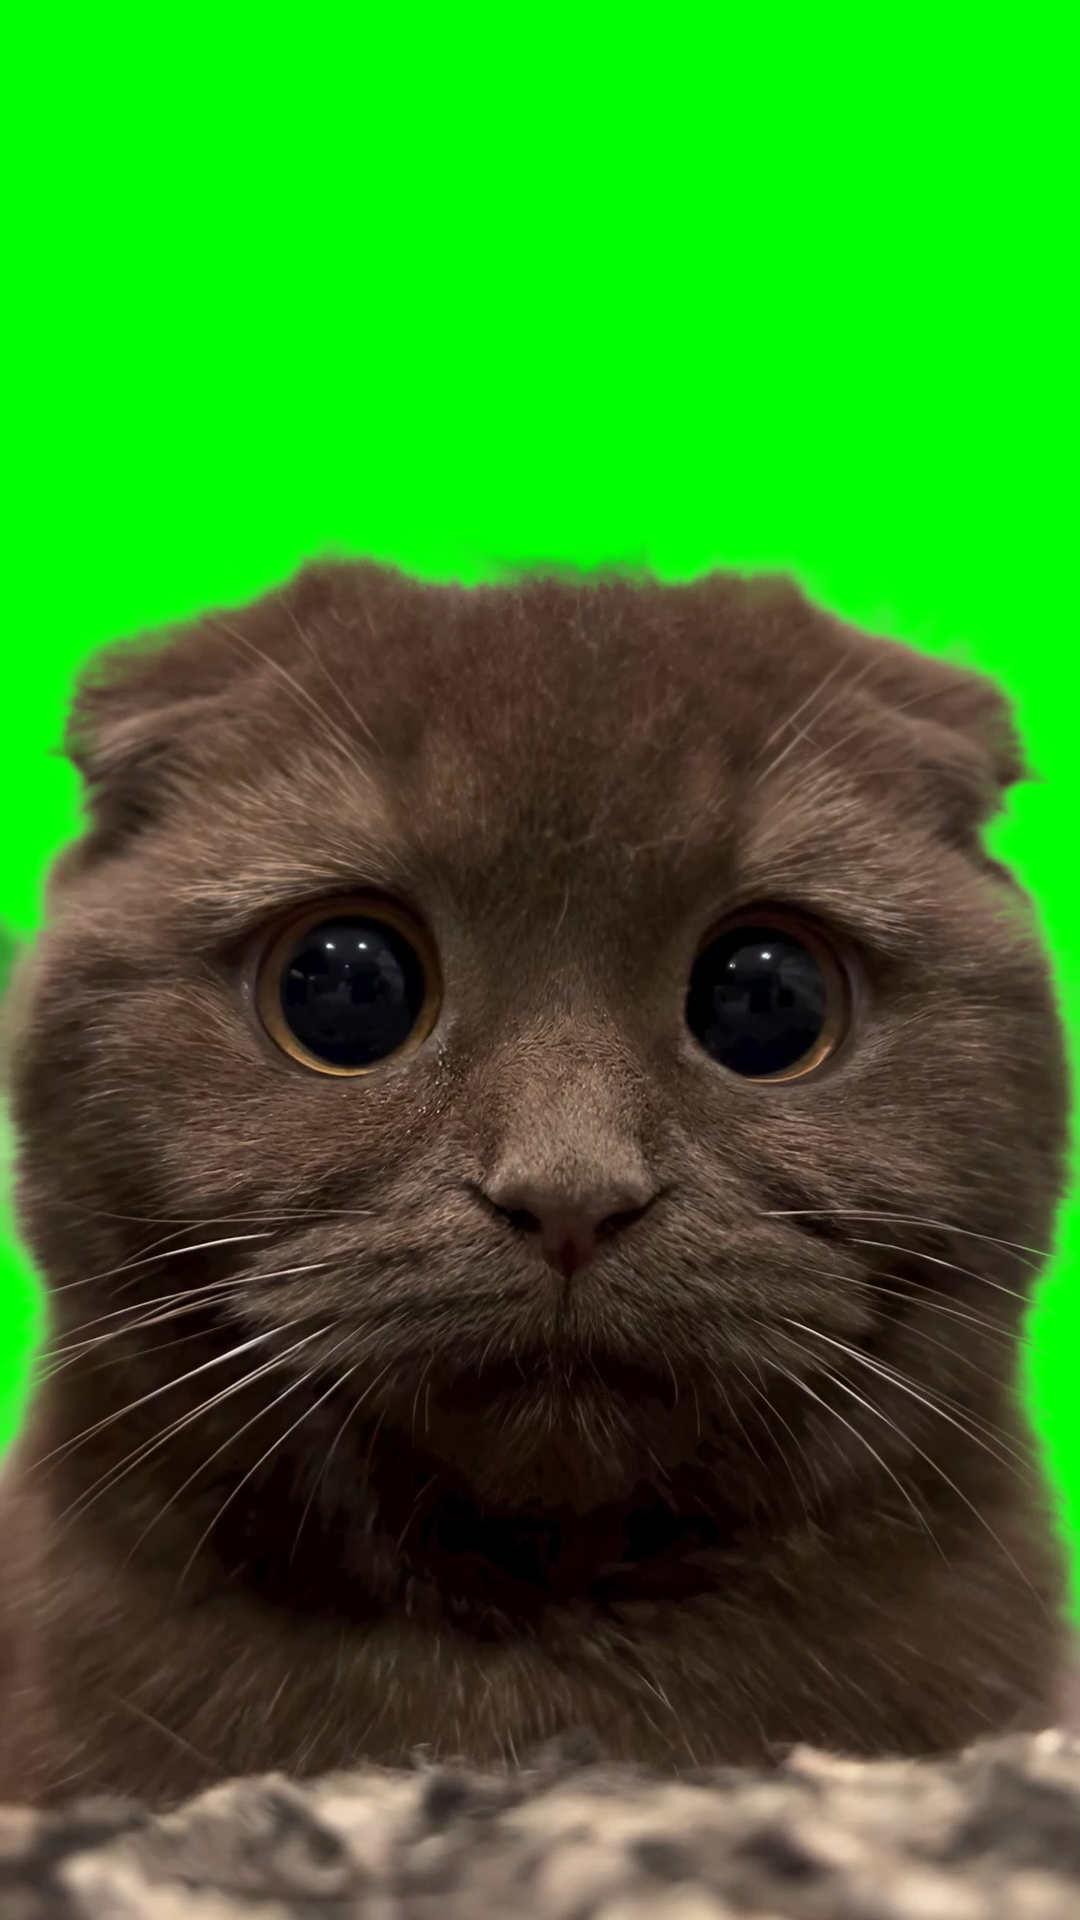 Cat Sad Eyes meme (Green Screen)